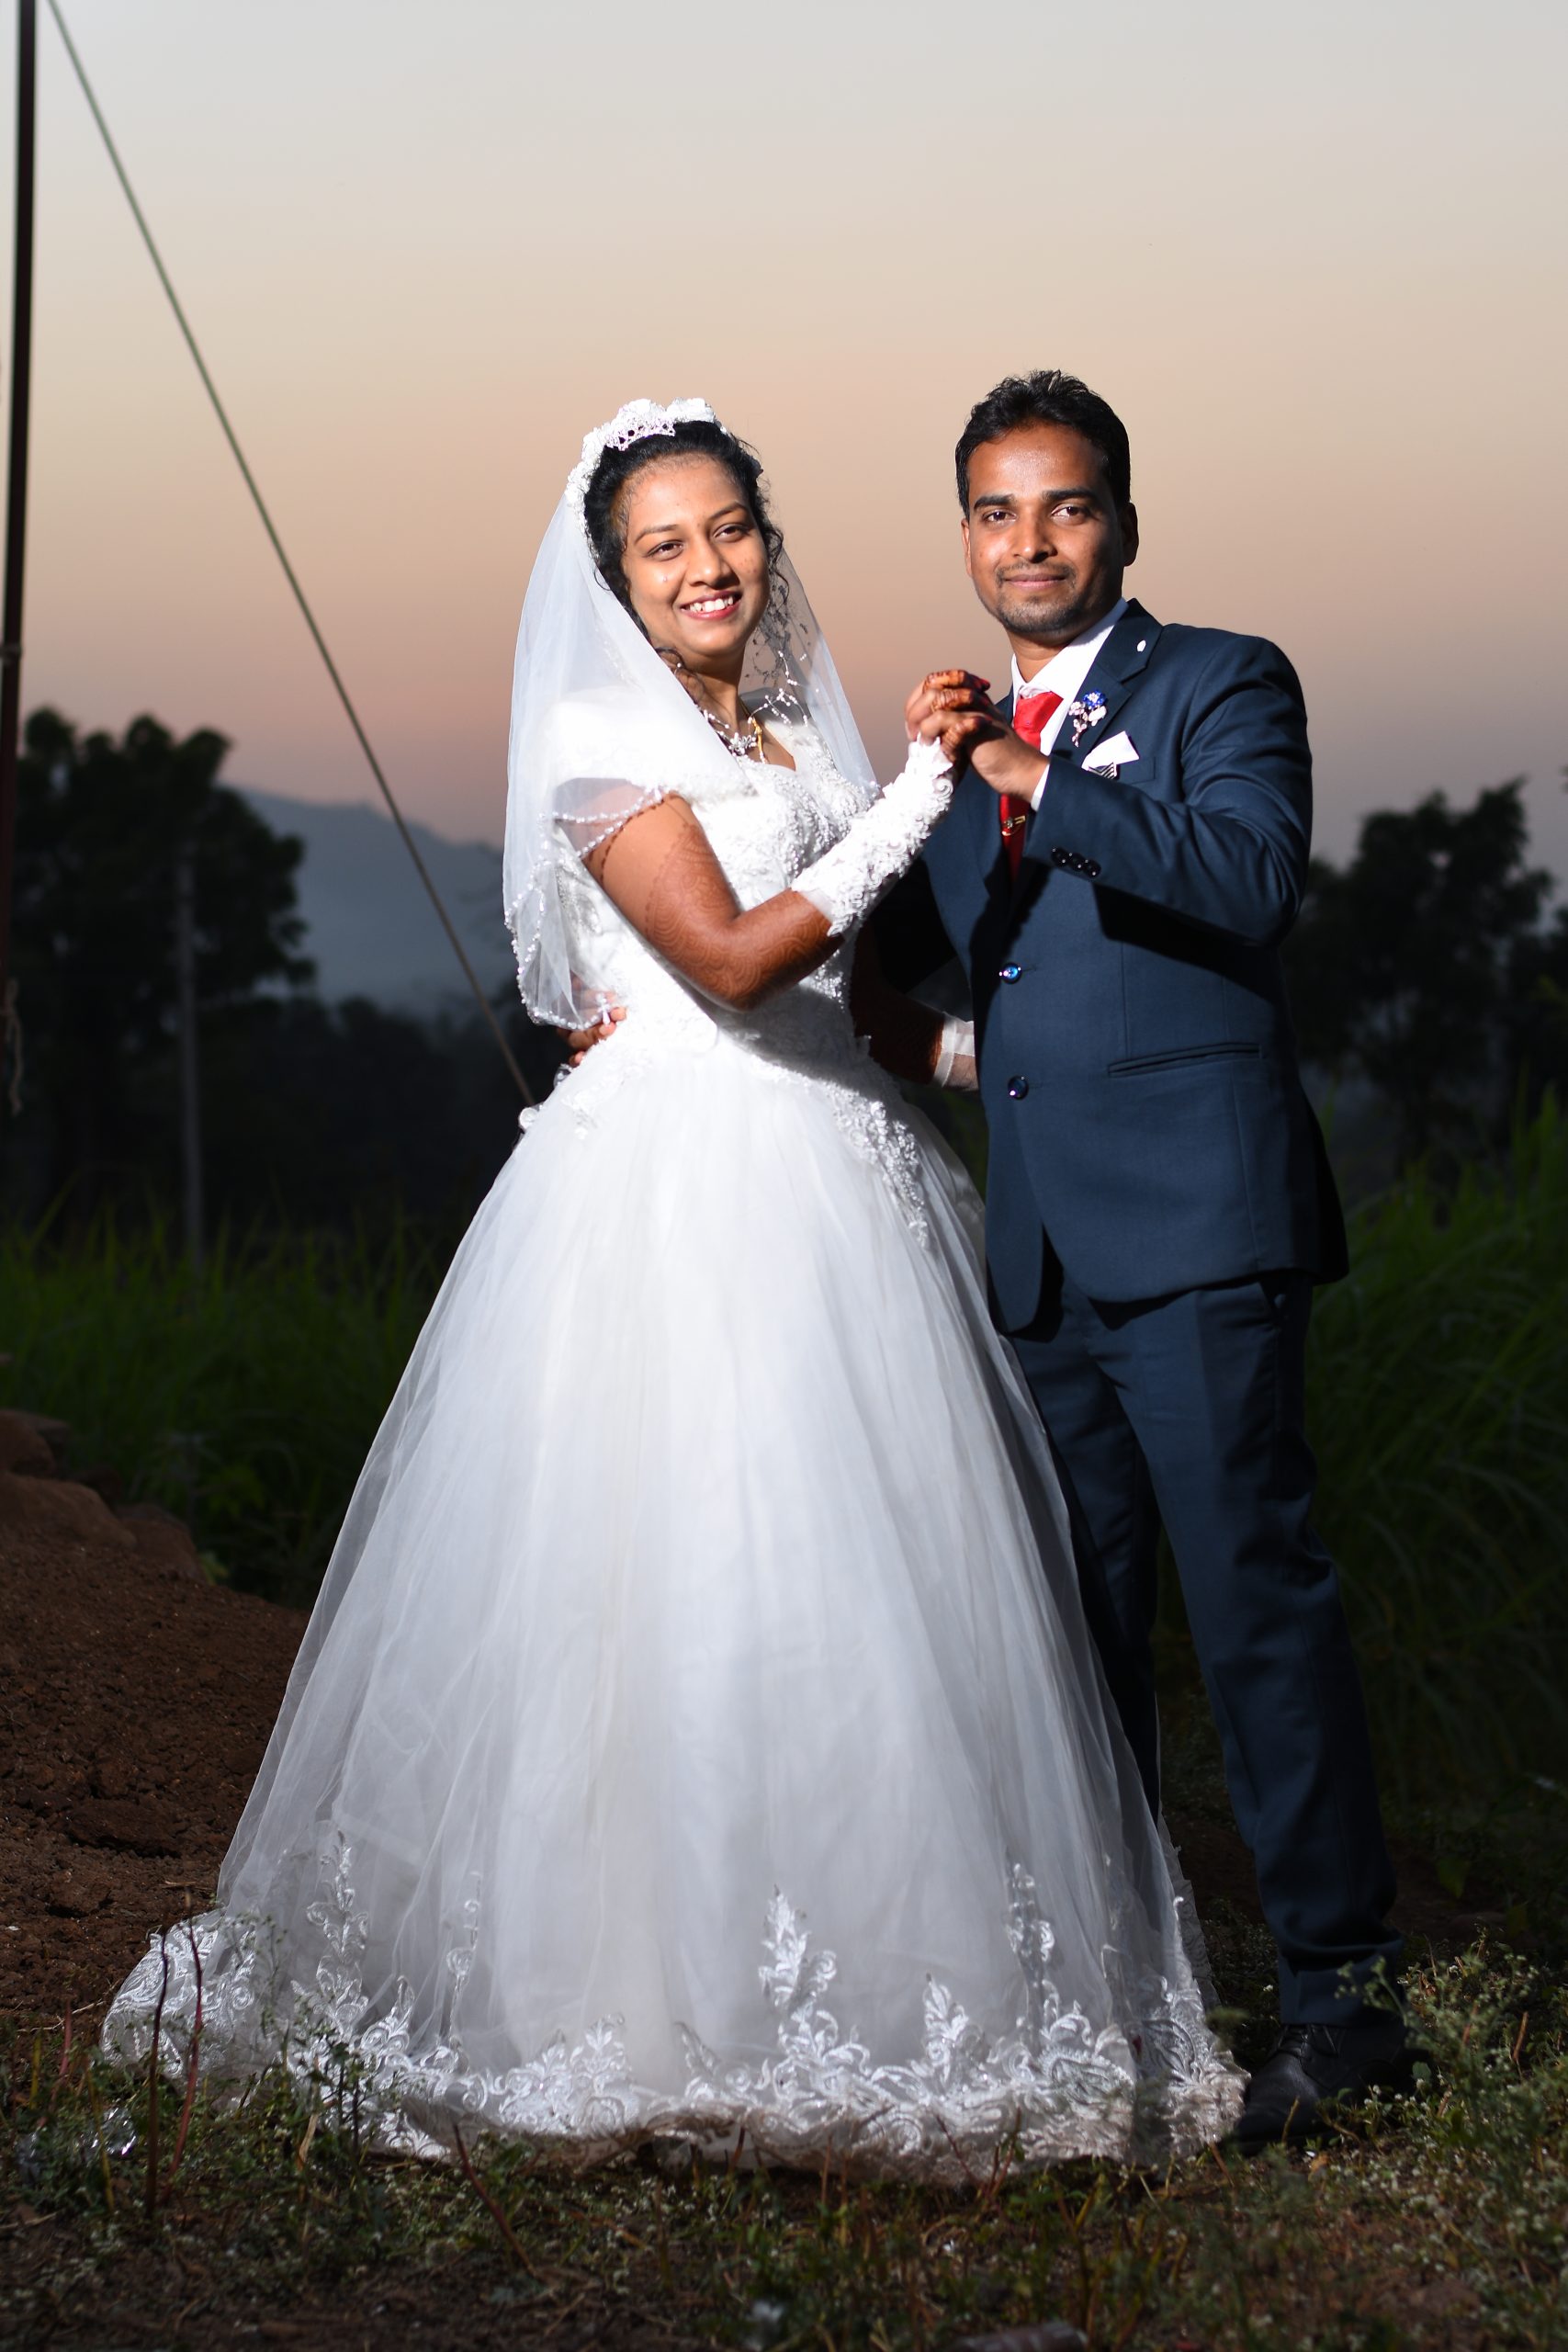 Top 10 mandatory wedding poses of 2020 | Zero Gravity Photography